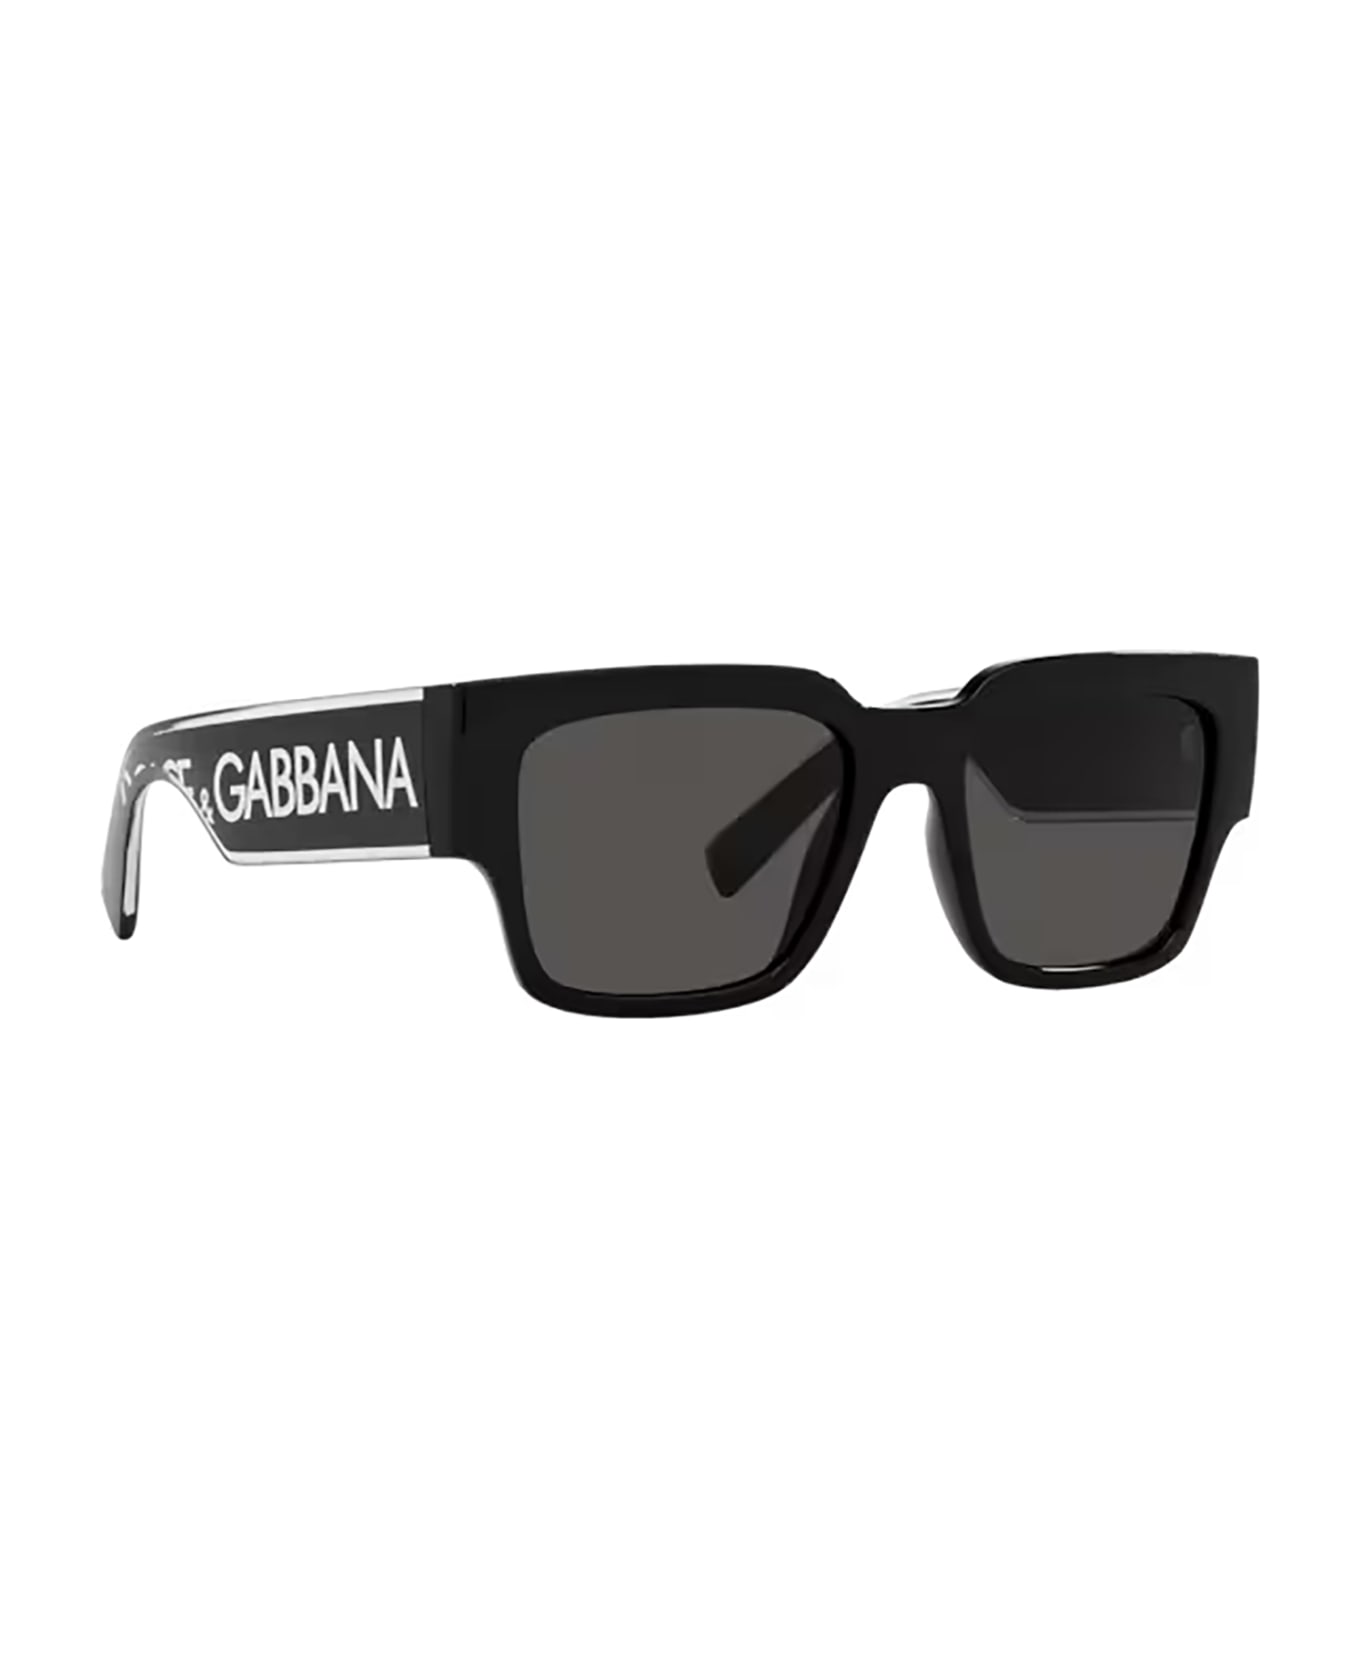 Dolce & Gabbana Eyewear Dg6184 Black Sunglasses - Black